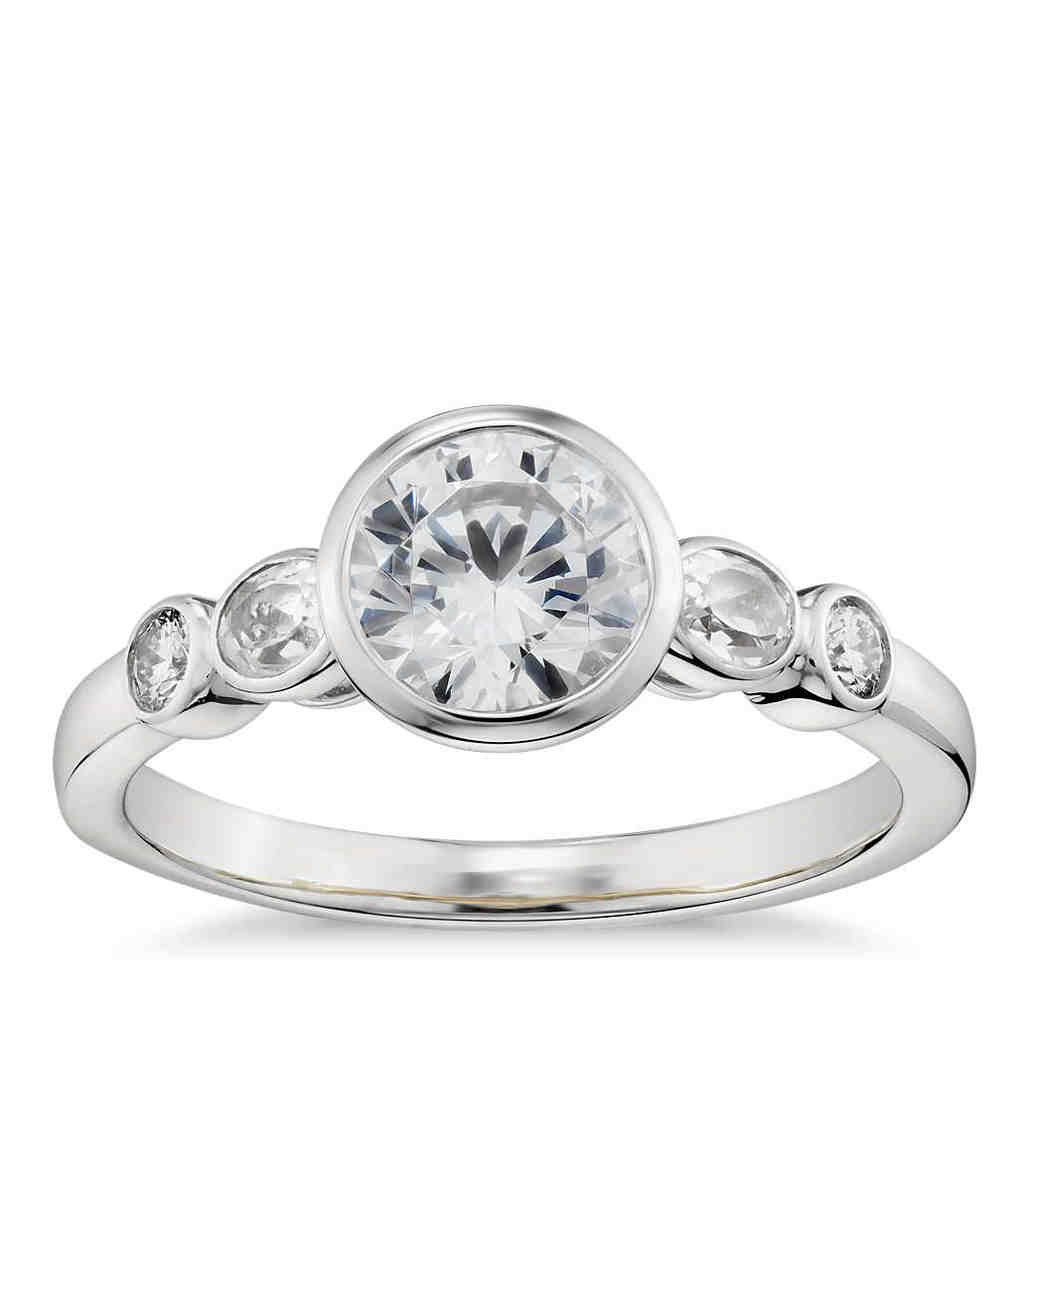 Top Wedding Ring Designers
 Best Wedding Ring Brands Best 21 Best New Engagement